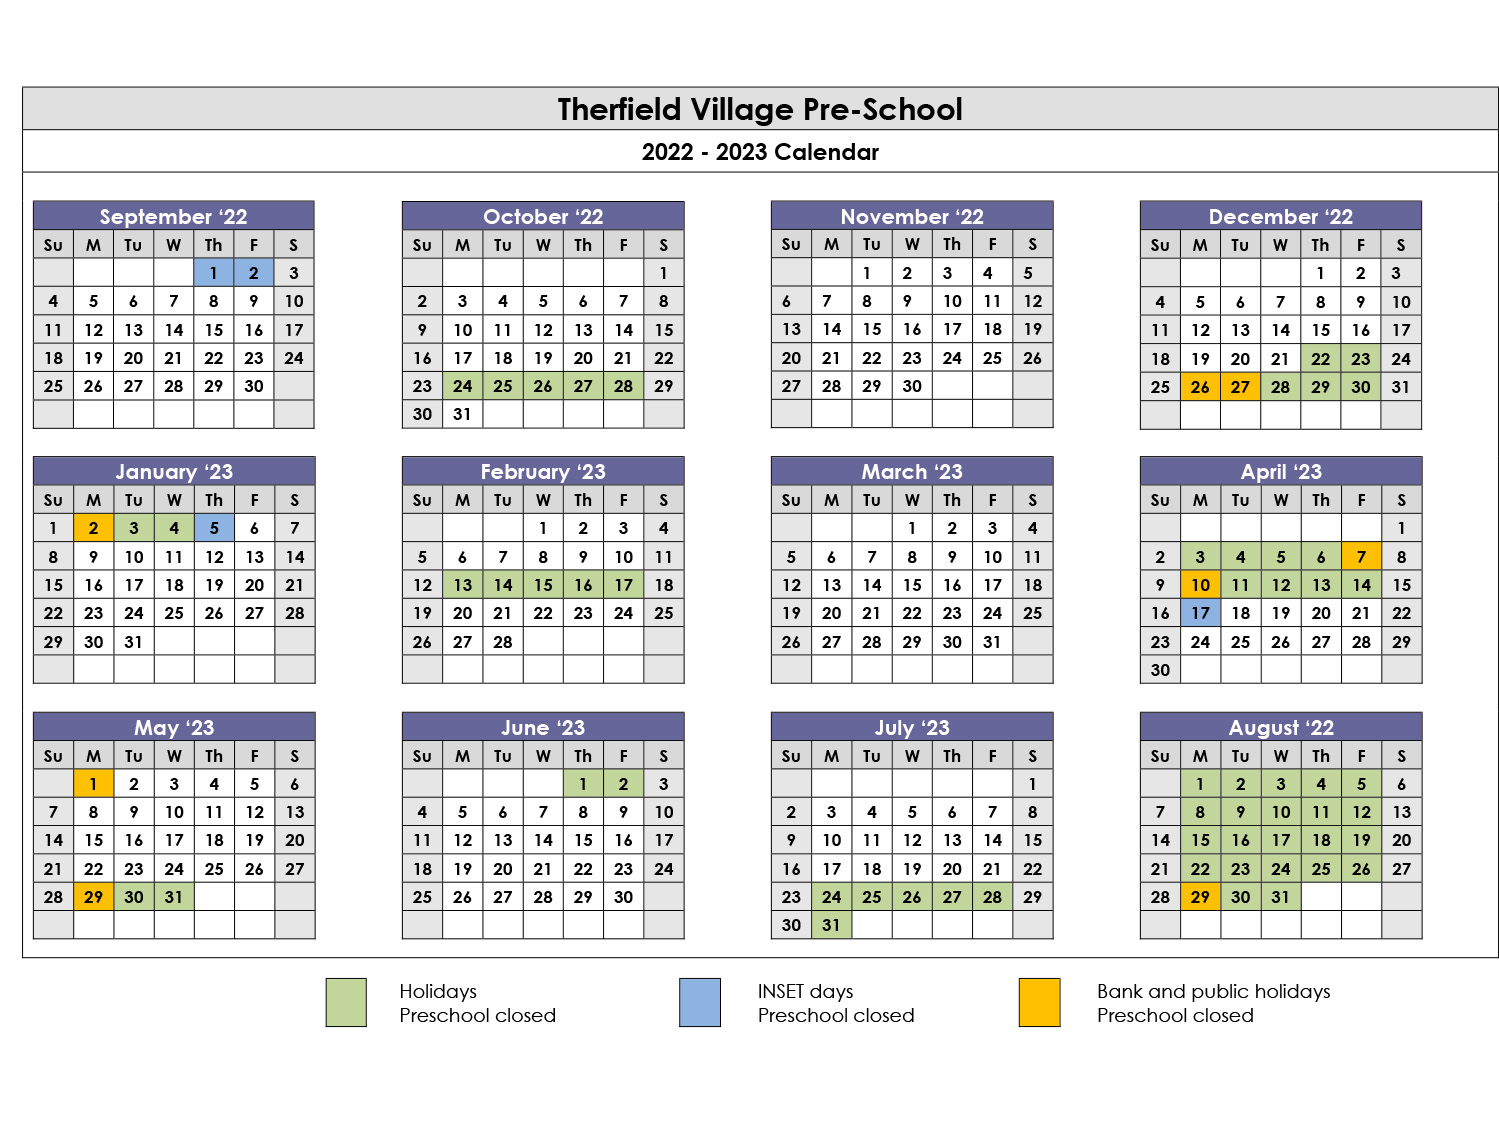 Term Times - Therfield Village Pre-School